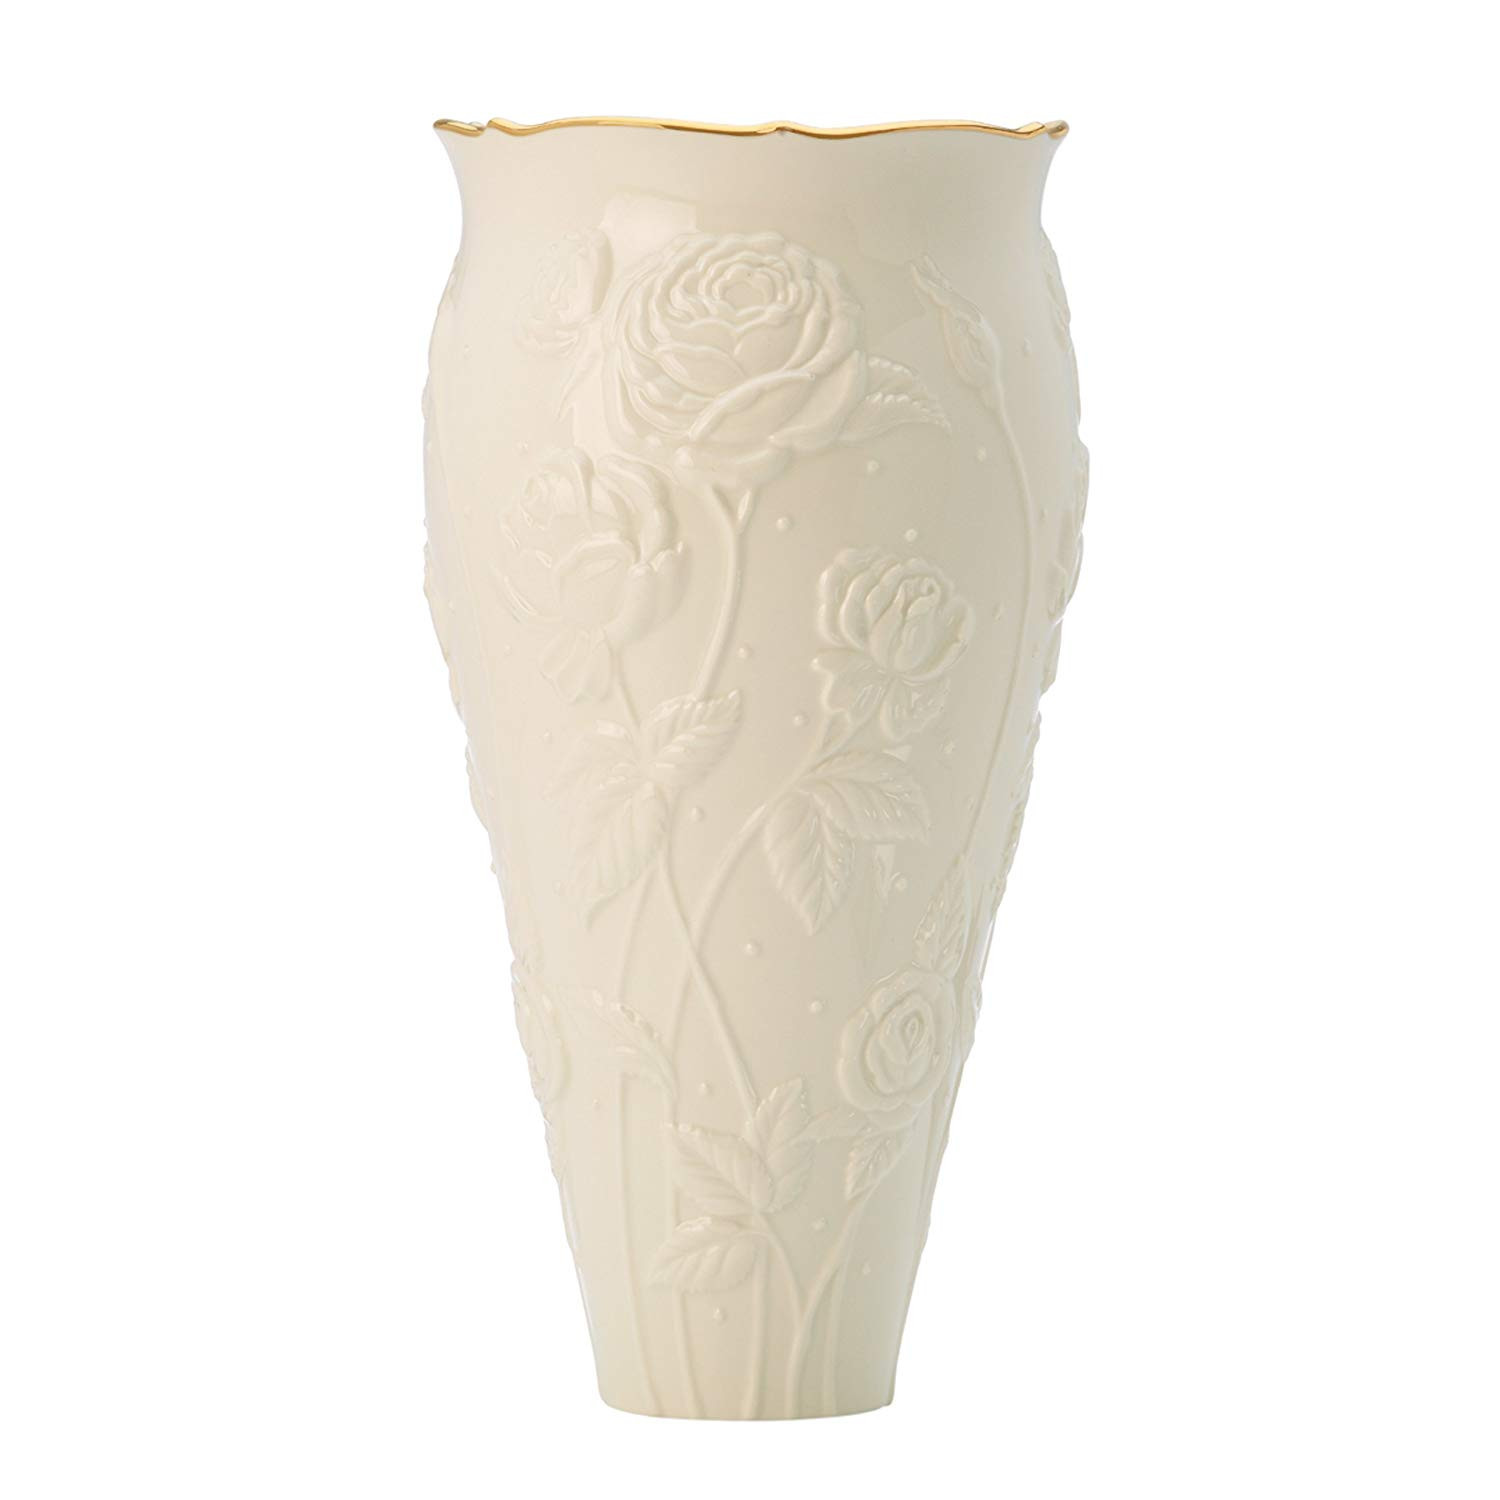 lenox china vases discontinued of amazon com ivory rose large vase by lenox decorative vases throughout amazon com ivory rose large vase by lenox decorative vases kitchen dining